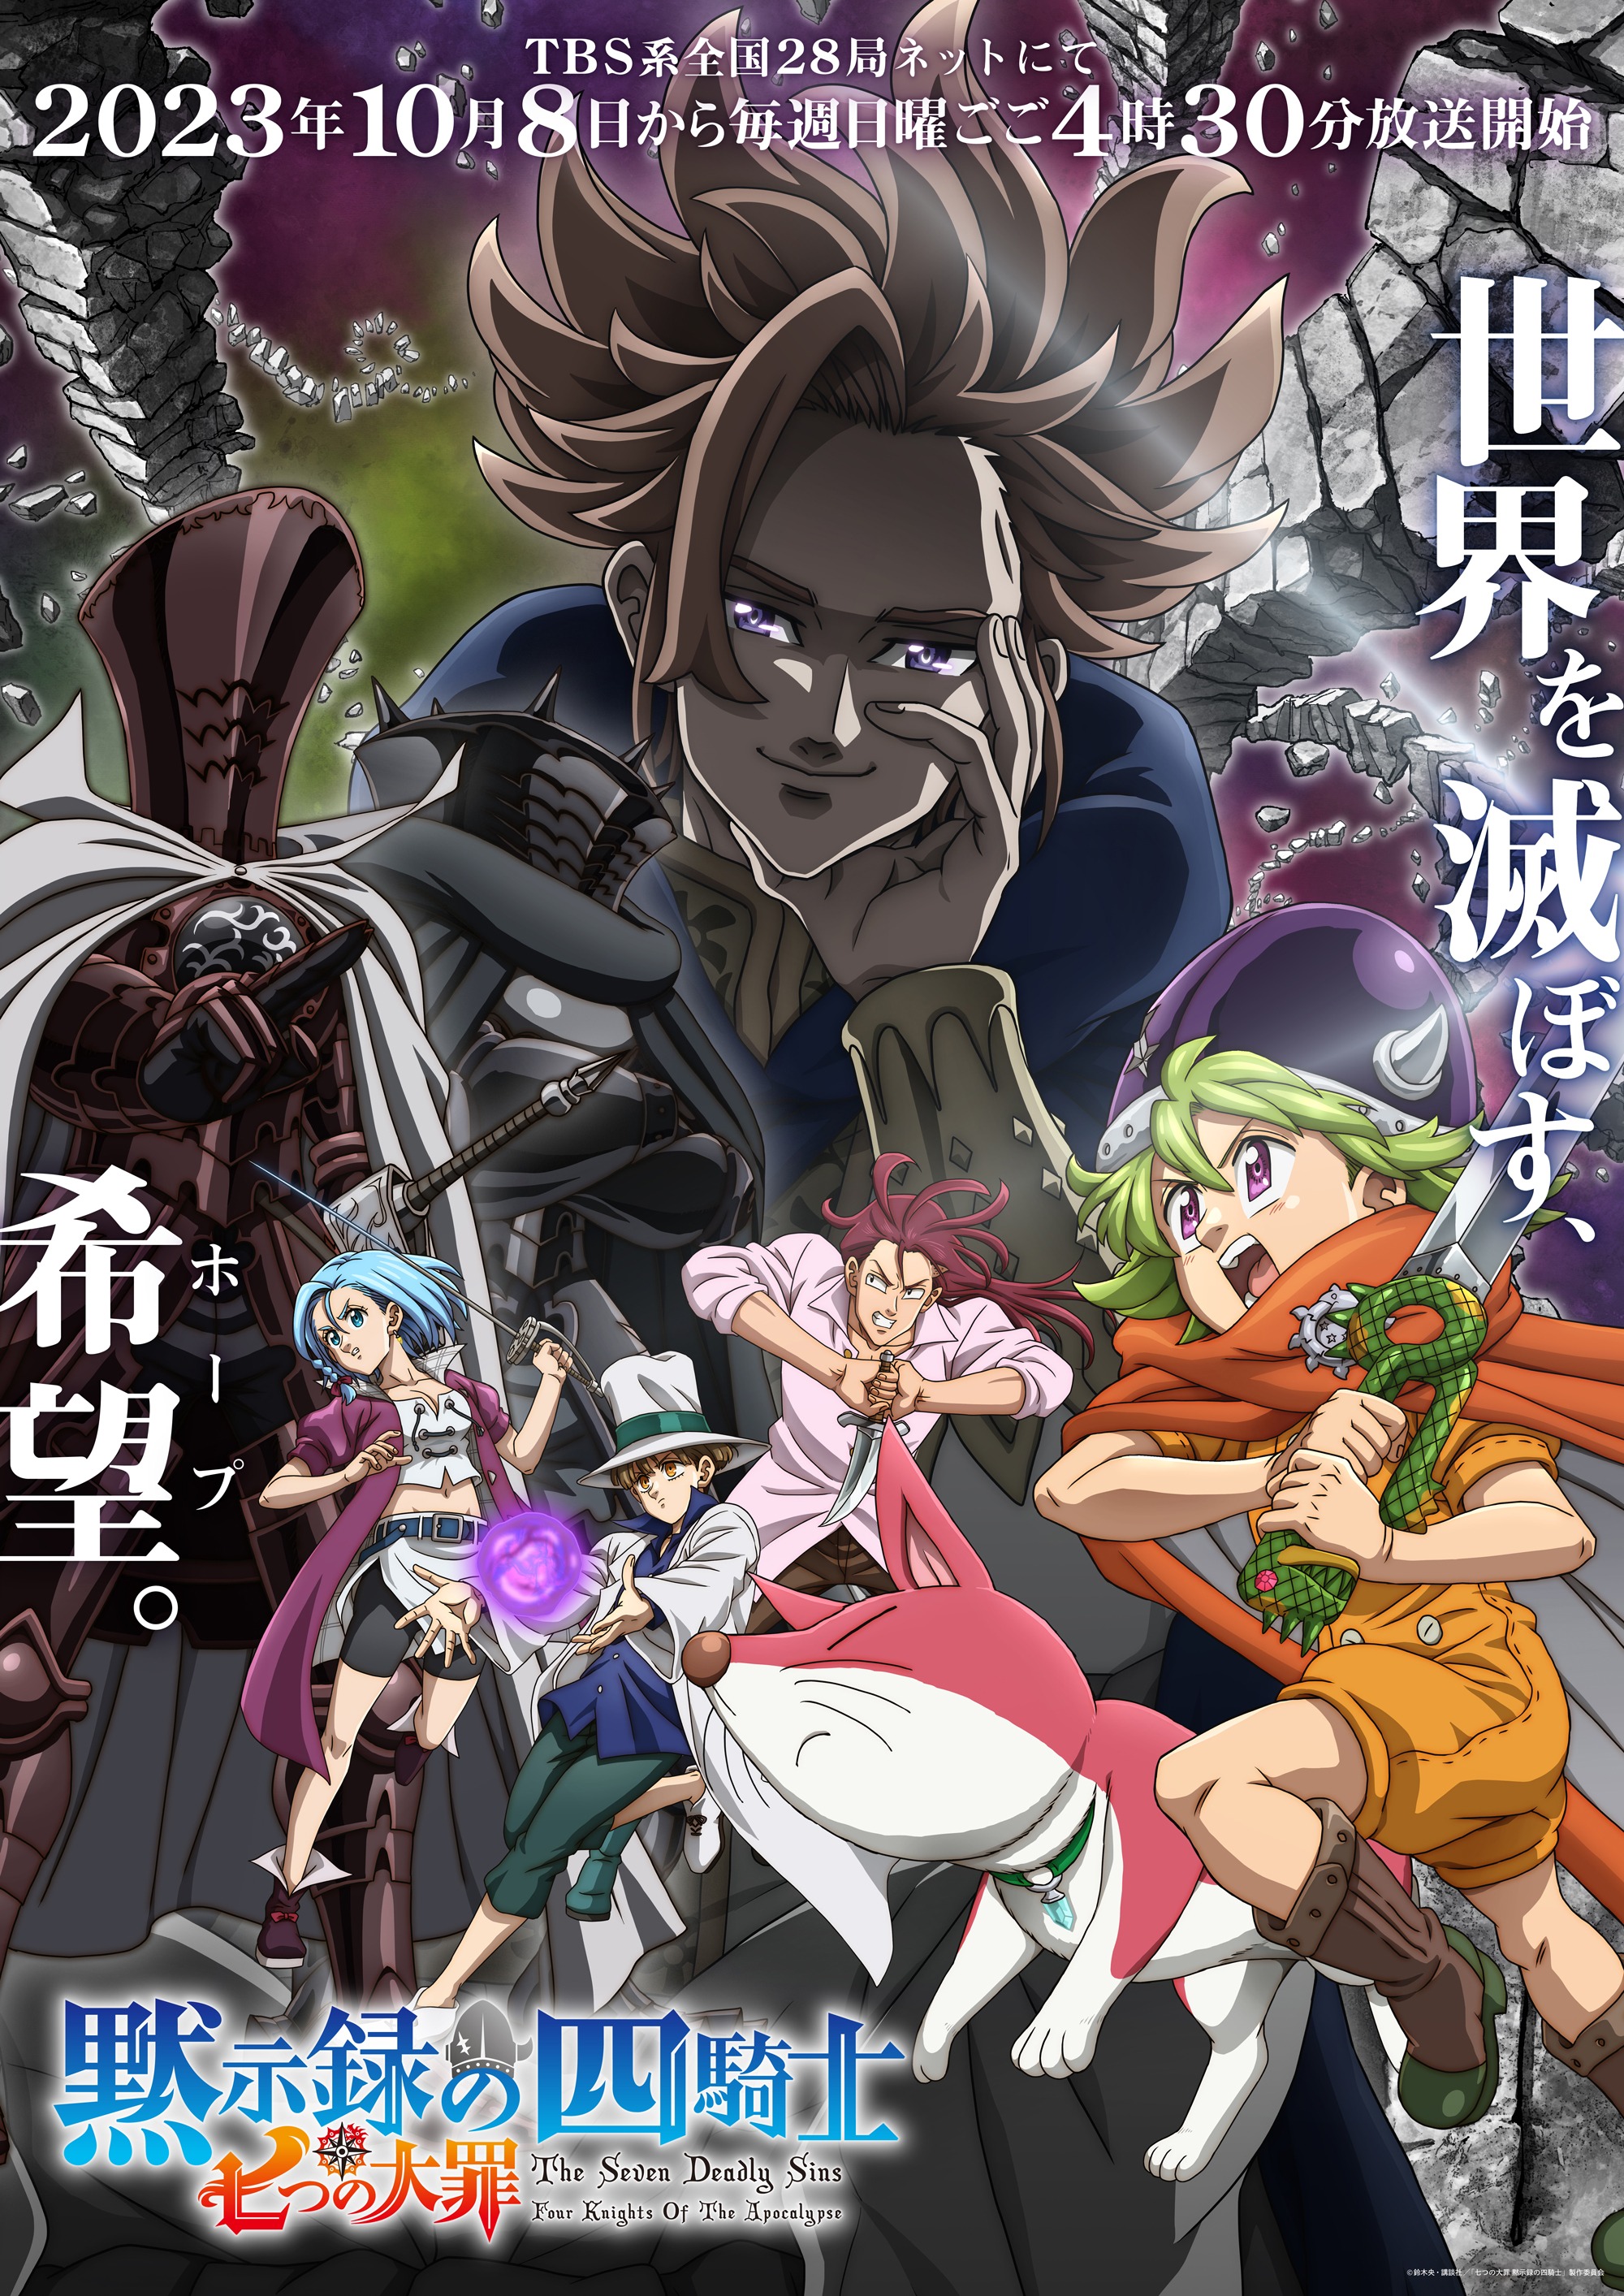 seven deadly sins anime visual main trailer